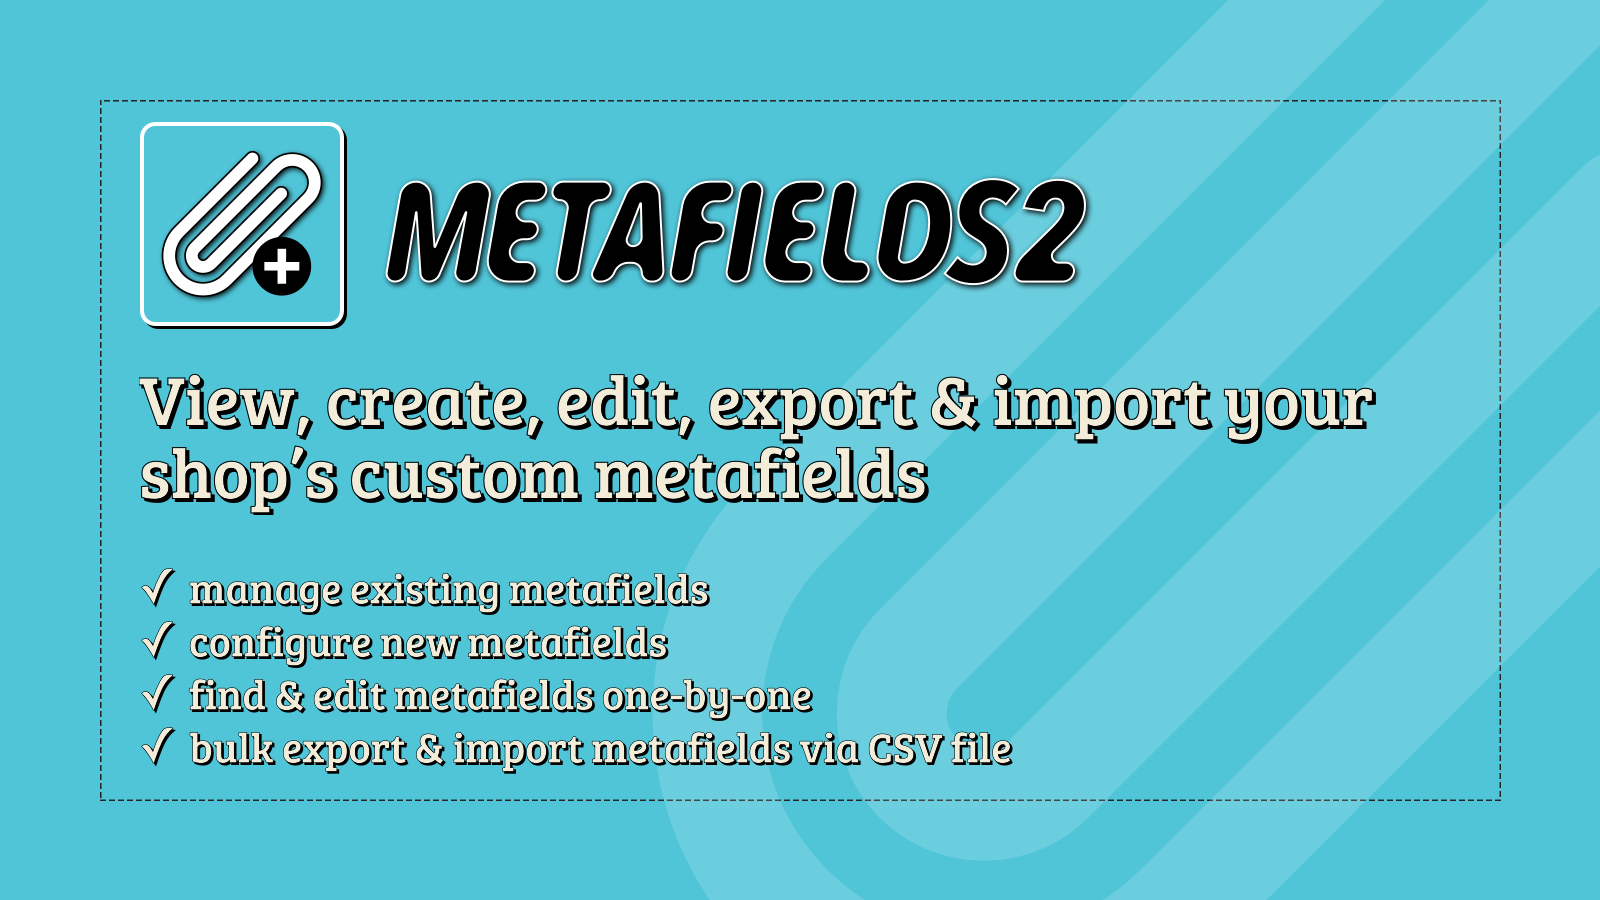 Metafields2 - Crie, edite, exporte/importe seus metafields personalizados